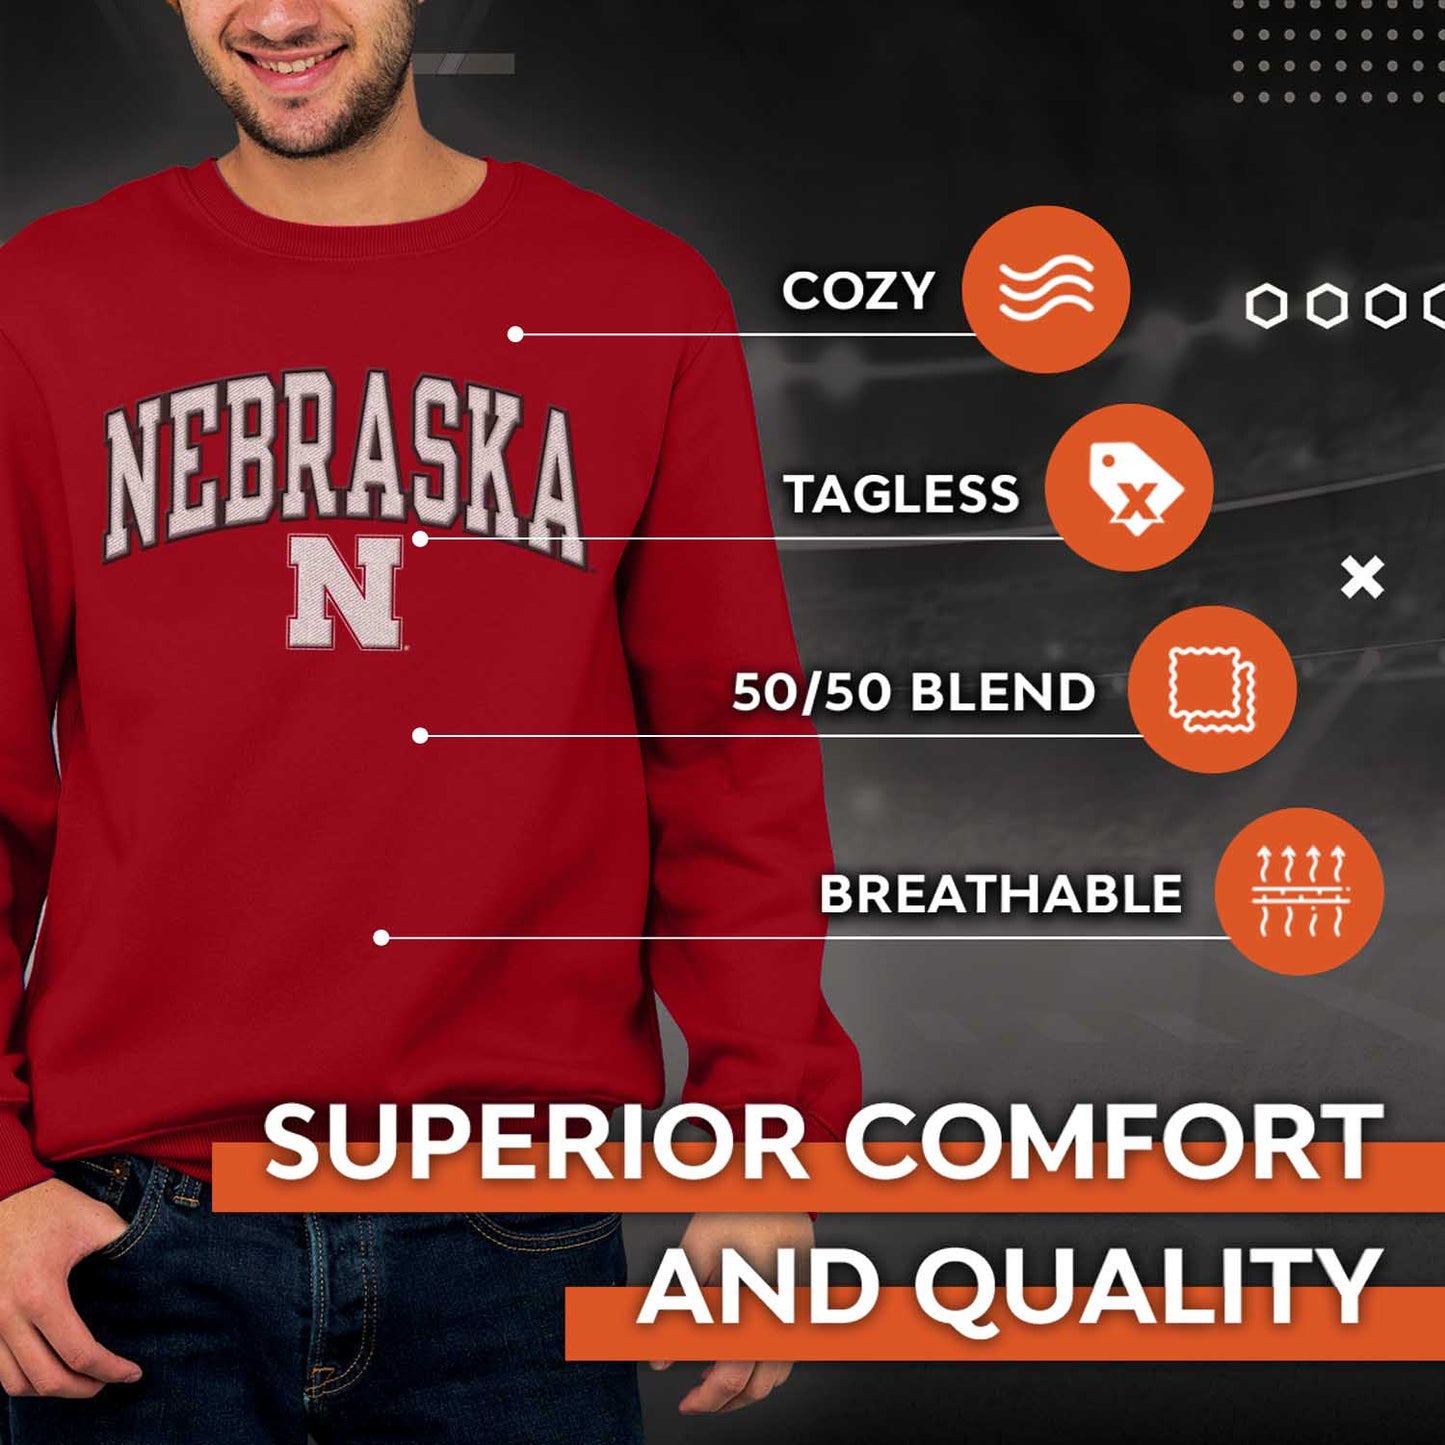 Nebraska Cornhuskers NCAA Adult Tackle Twill Crewneck Sweatshirt - Red